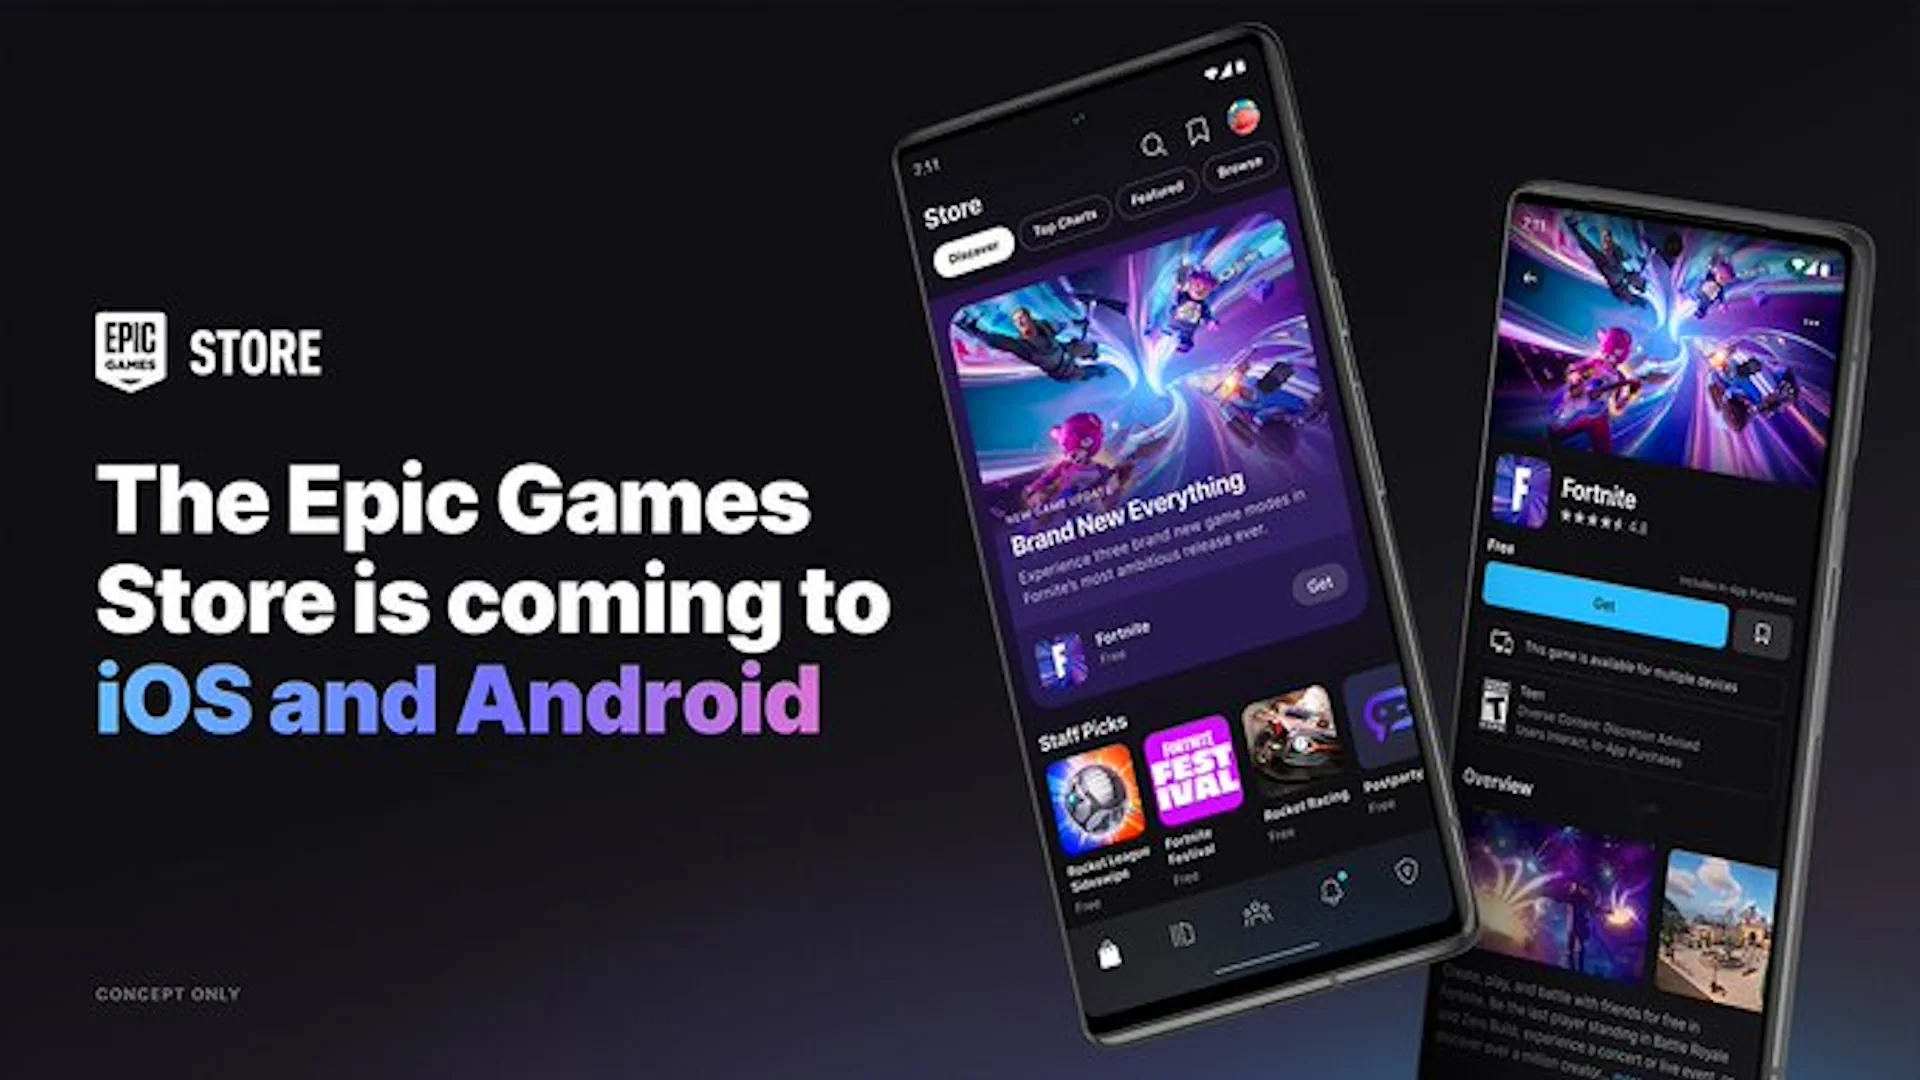 Svet igara na dlanu – Epic Games Store osvaja iOS i Android platforme